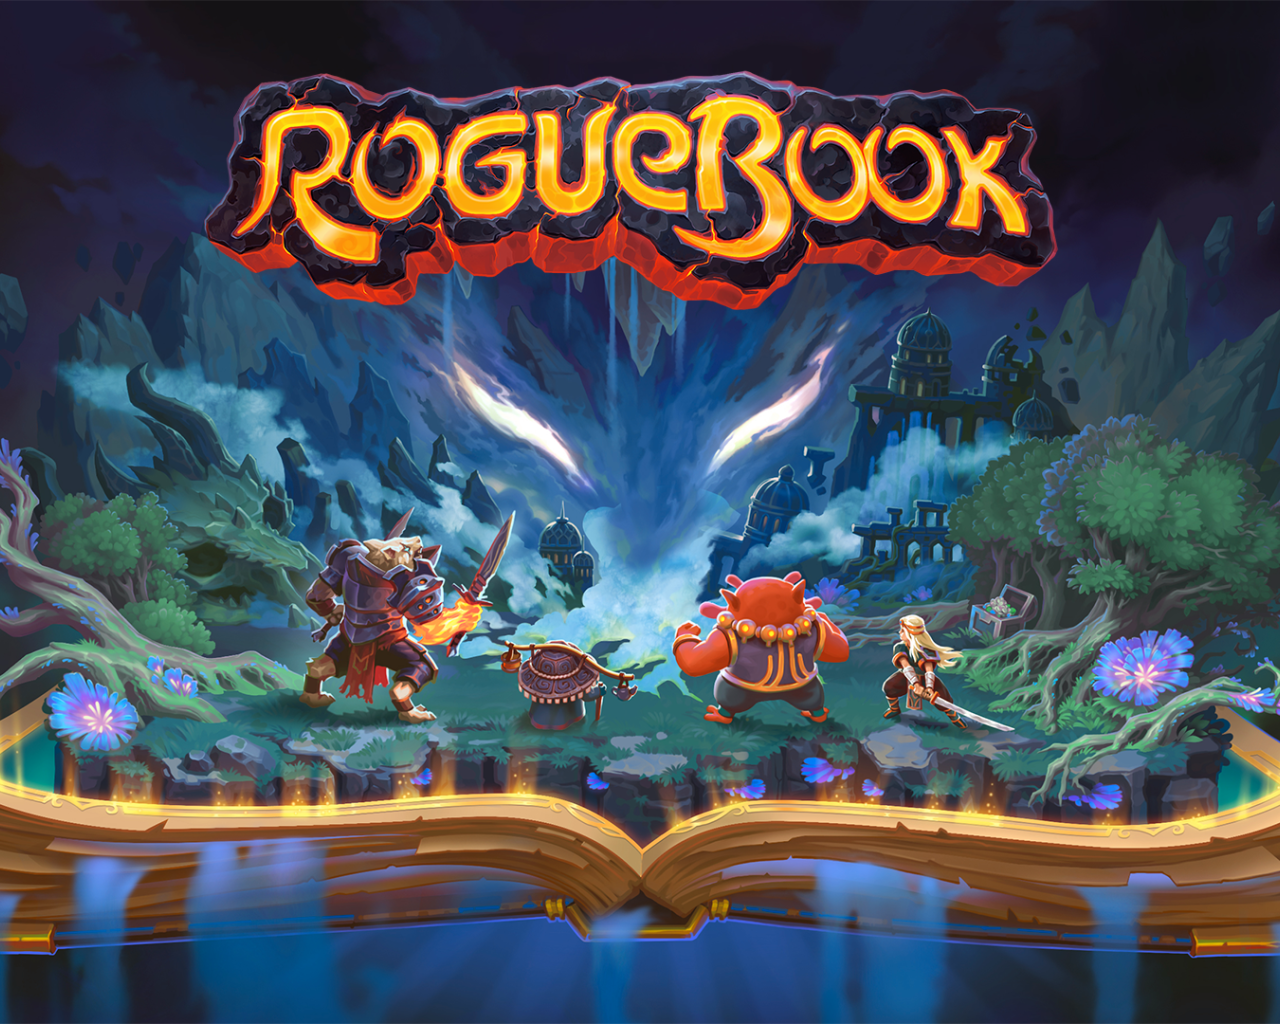 Roguebook computer game logo poster, 2021